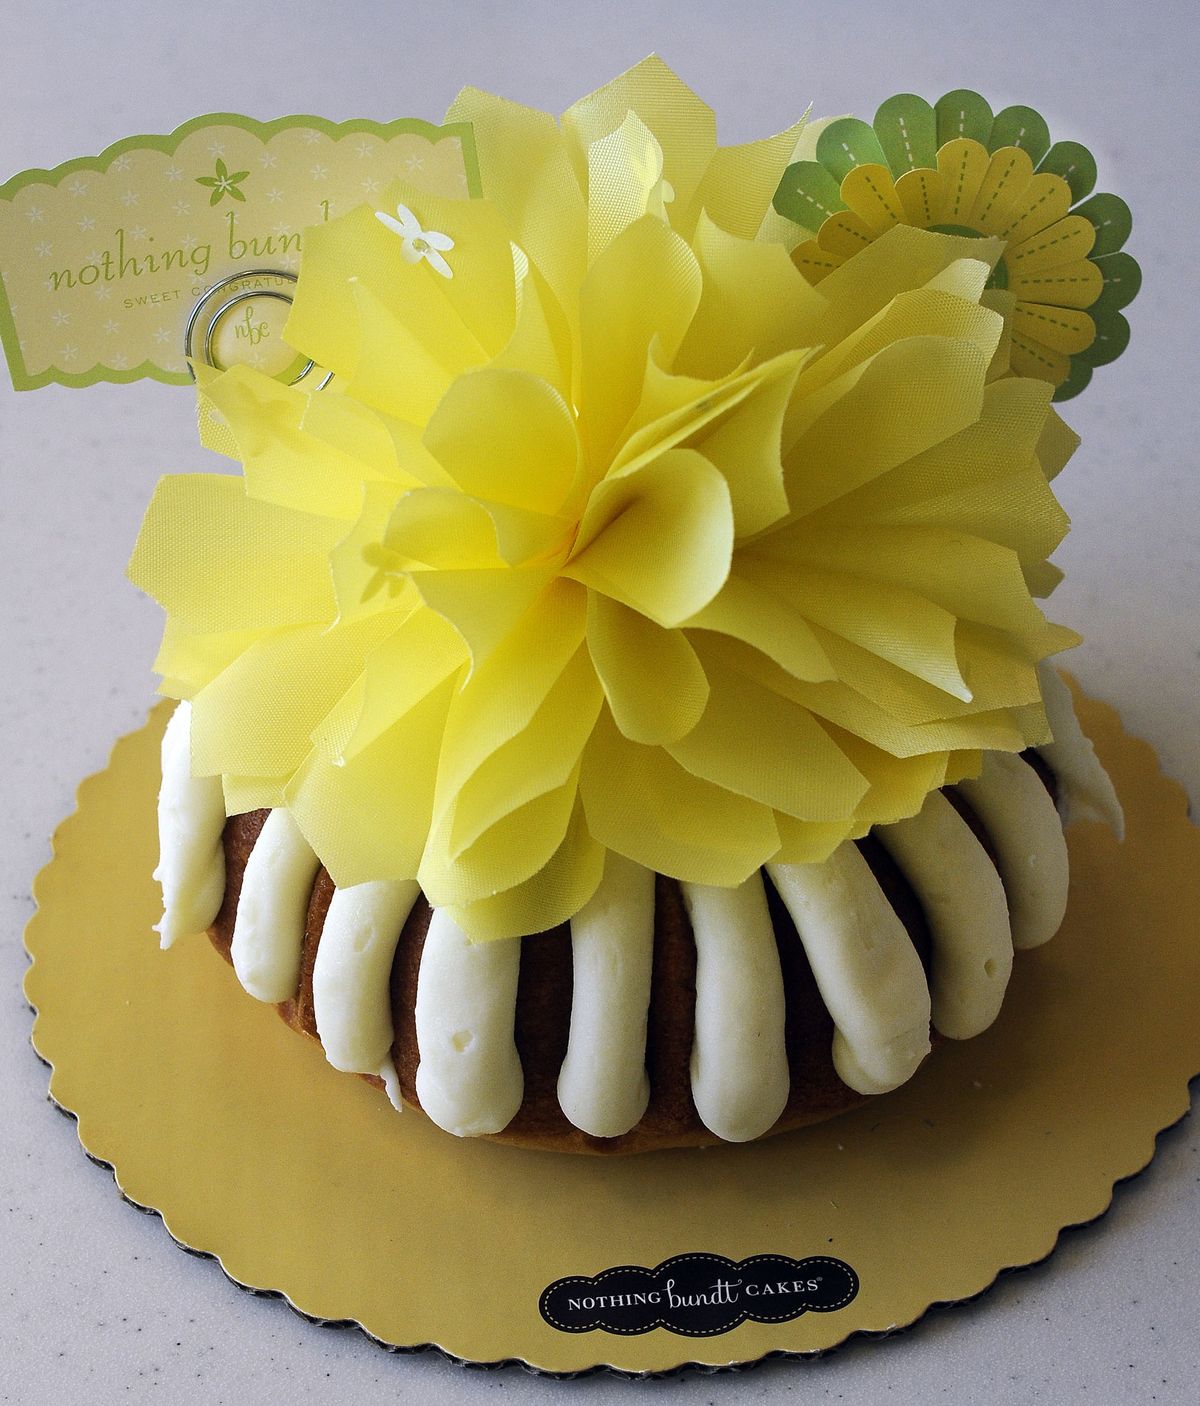 The Nothing Bundt Joy cake is one of several featured designs. (Liz Kishimoto)